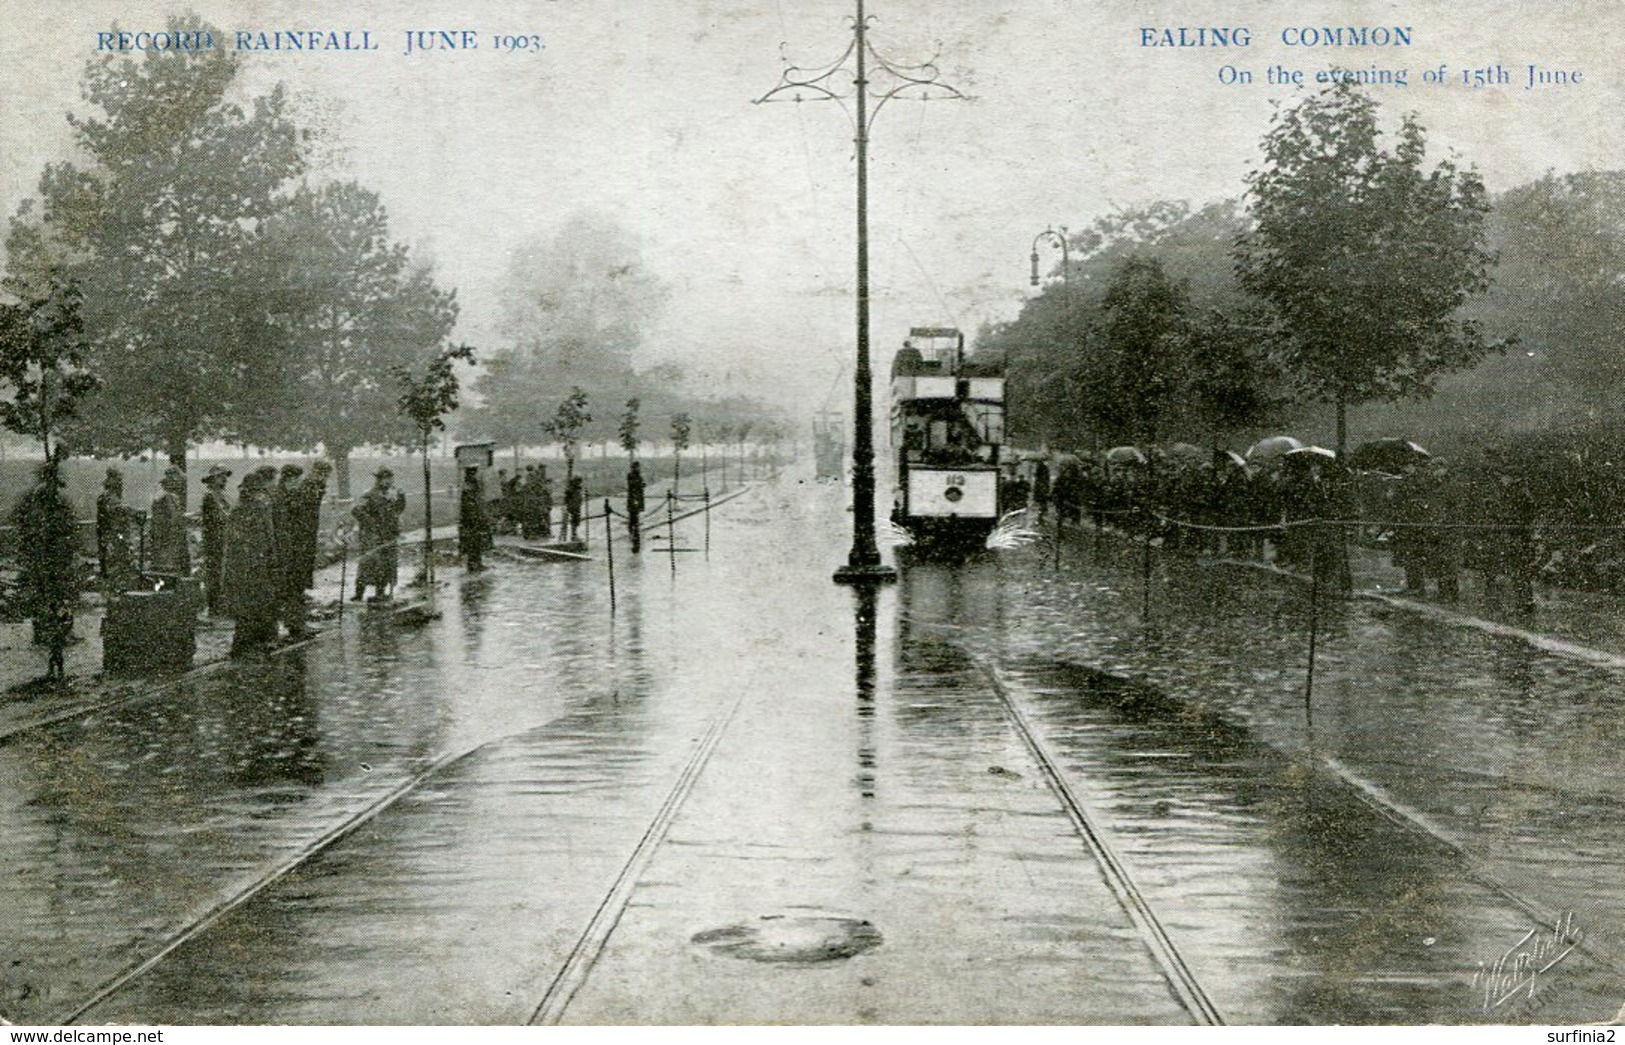 LONDON - EALING COMMON - RECORD RAINFALL 15th JUNE 1903  Lo1157 - London Suburbs